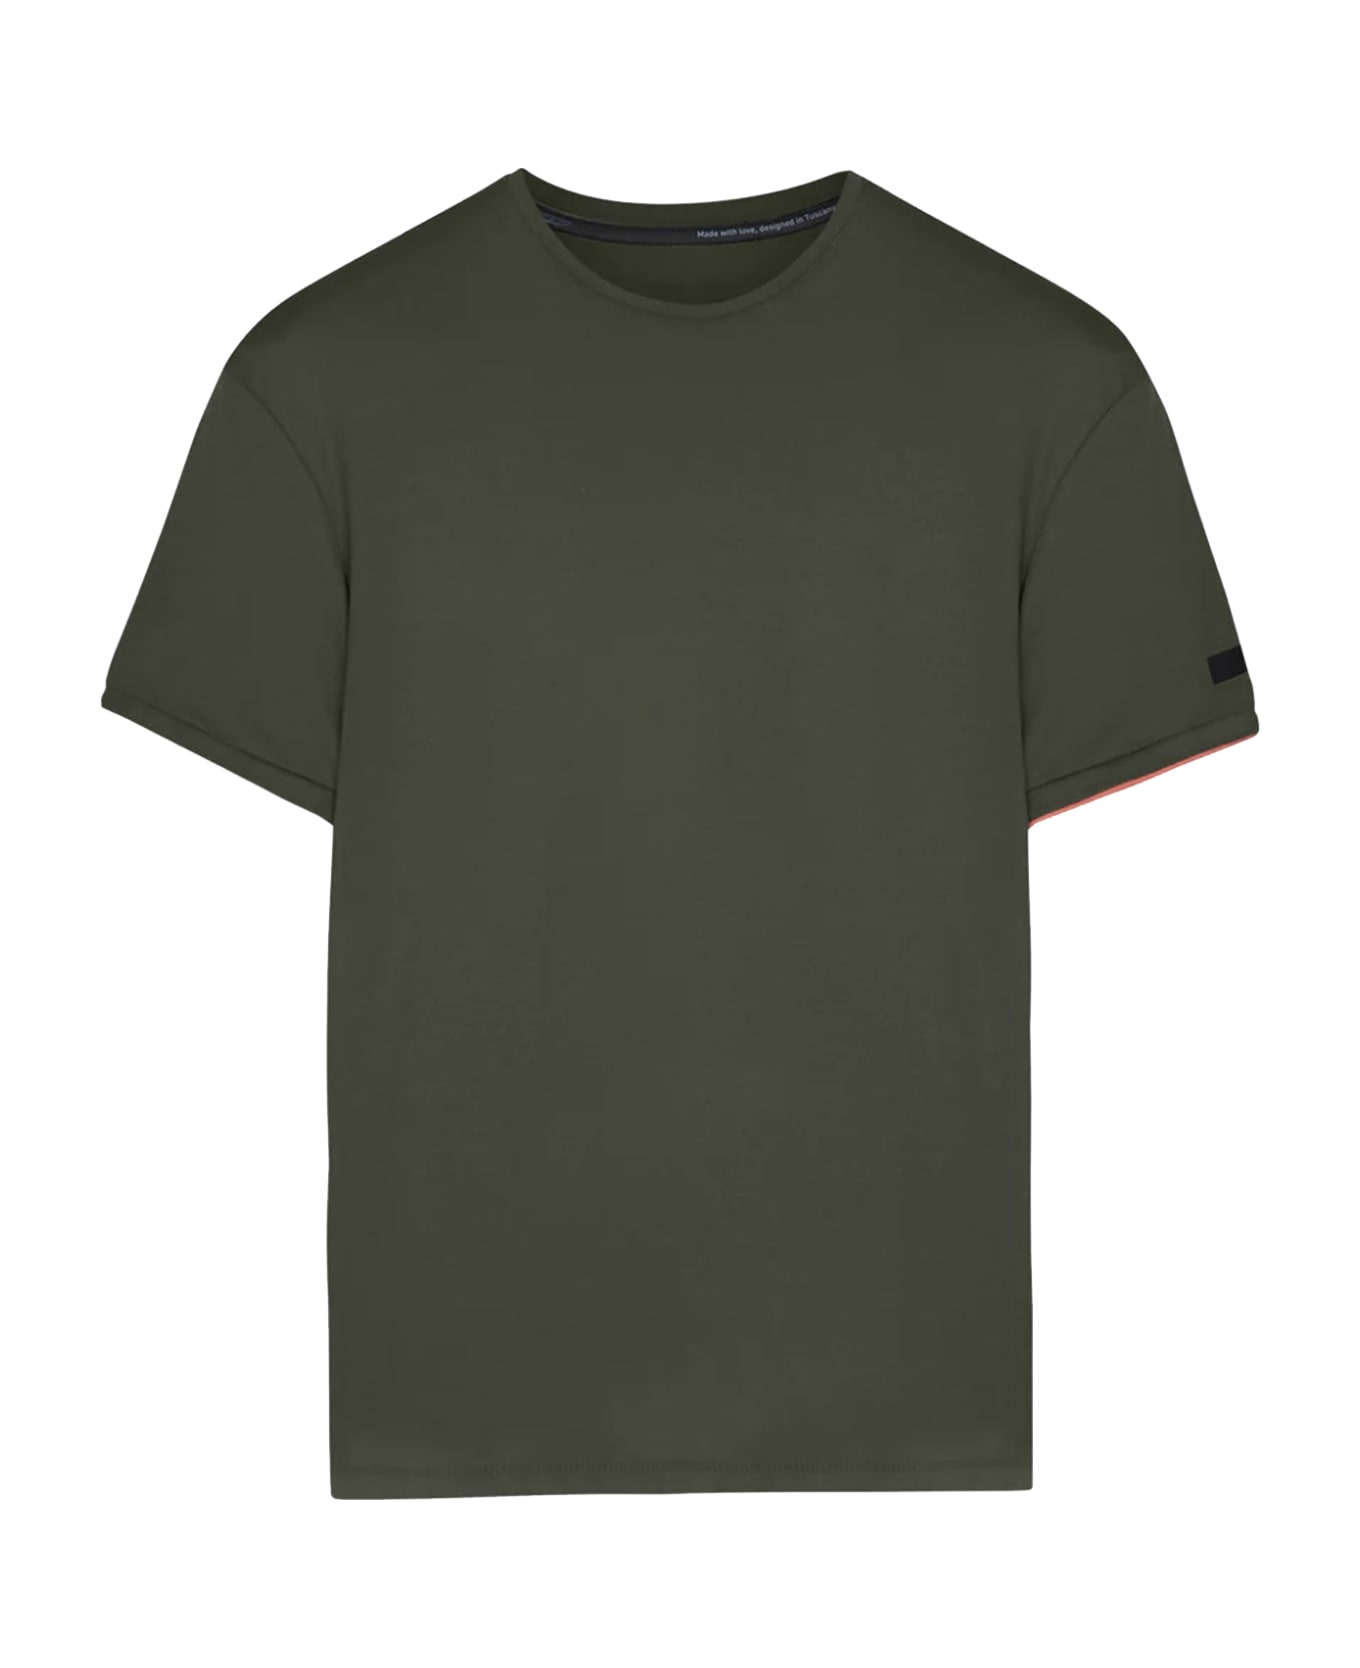 RRD - Roberto Ricci Design T-shirt Macro - Verde Militare シャツ